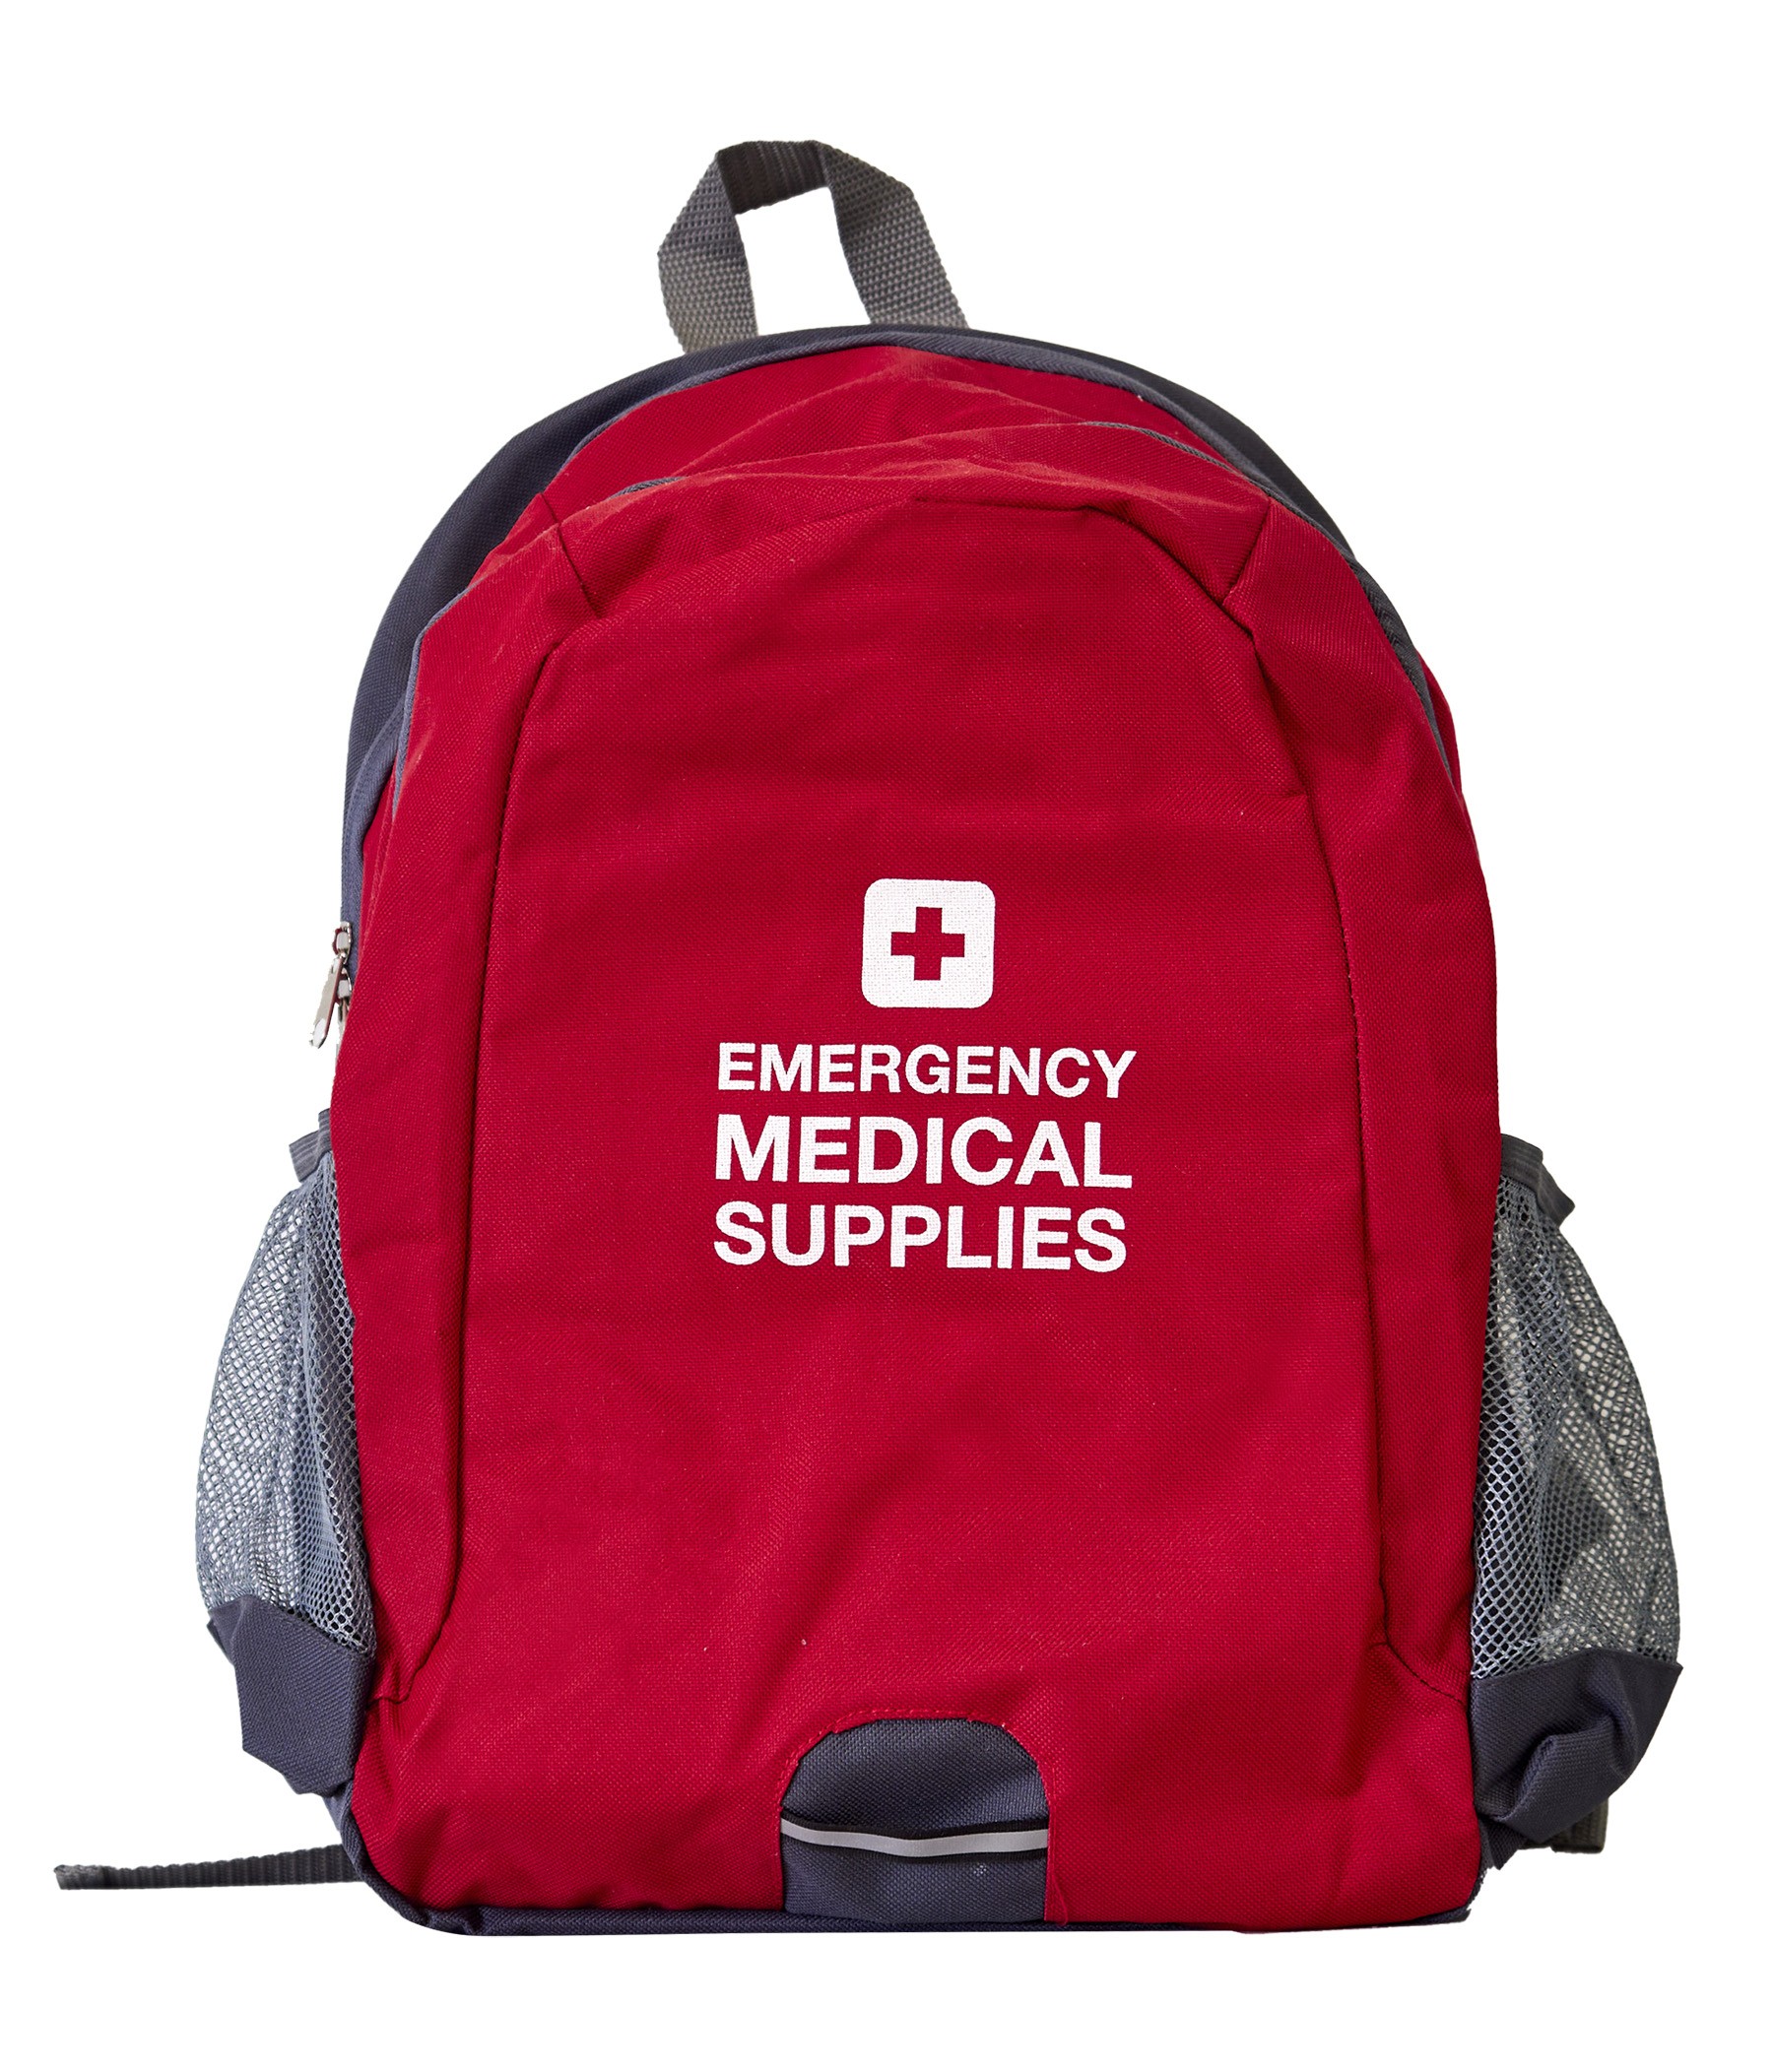 Disaster Supply Kit | Weather Underground